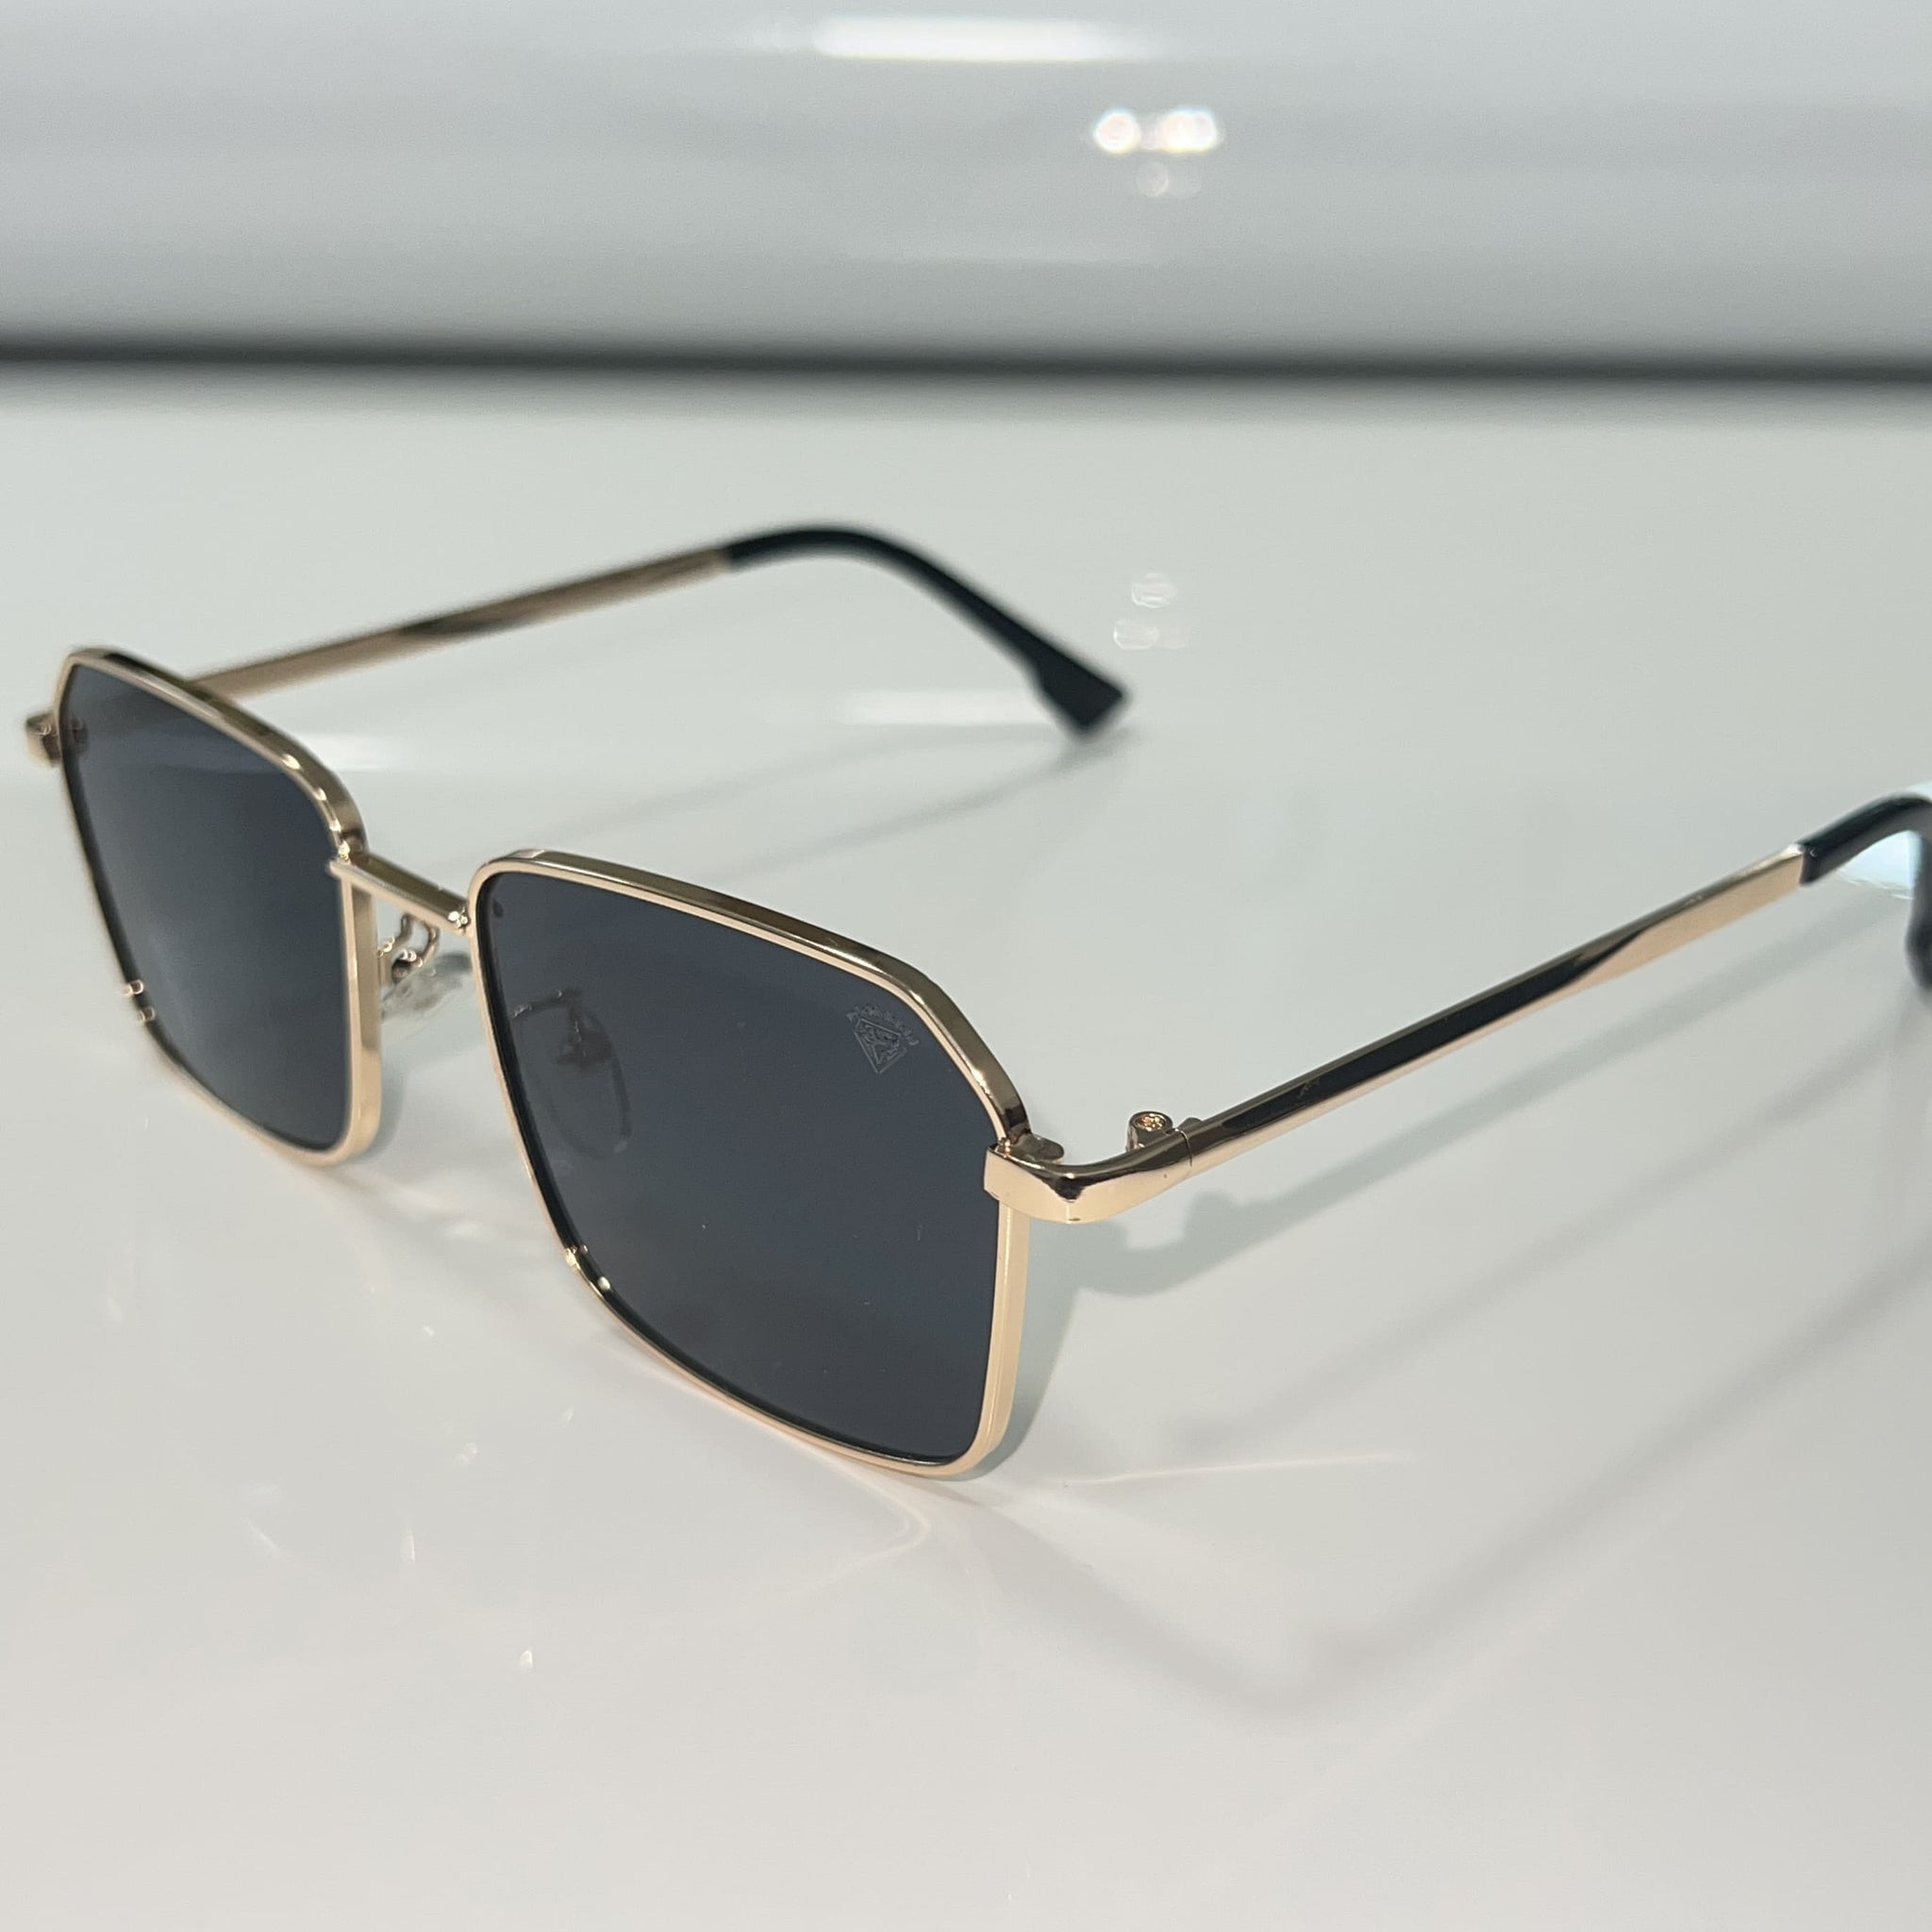 Celebrity Glasses - 14k gold plated - Sehgal Glasses - Black Shade